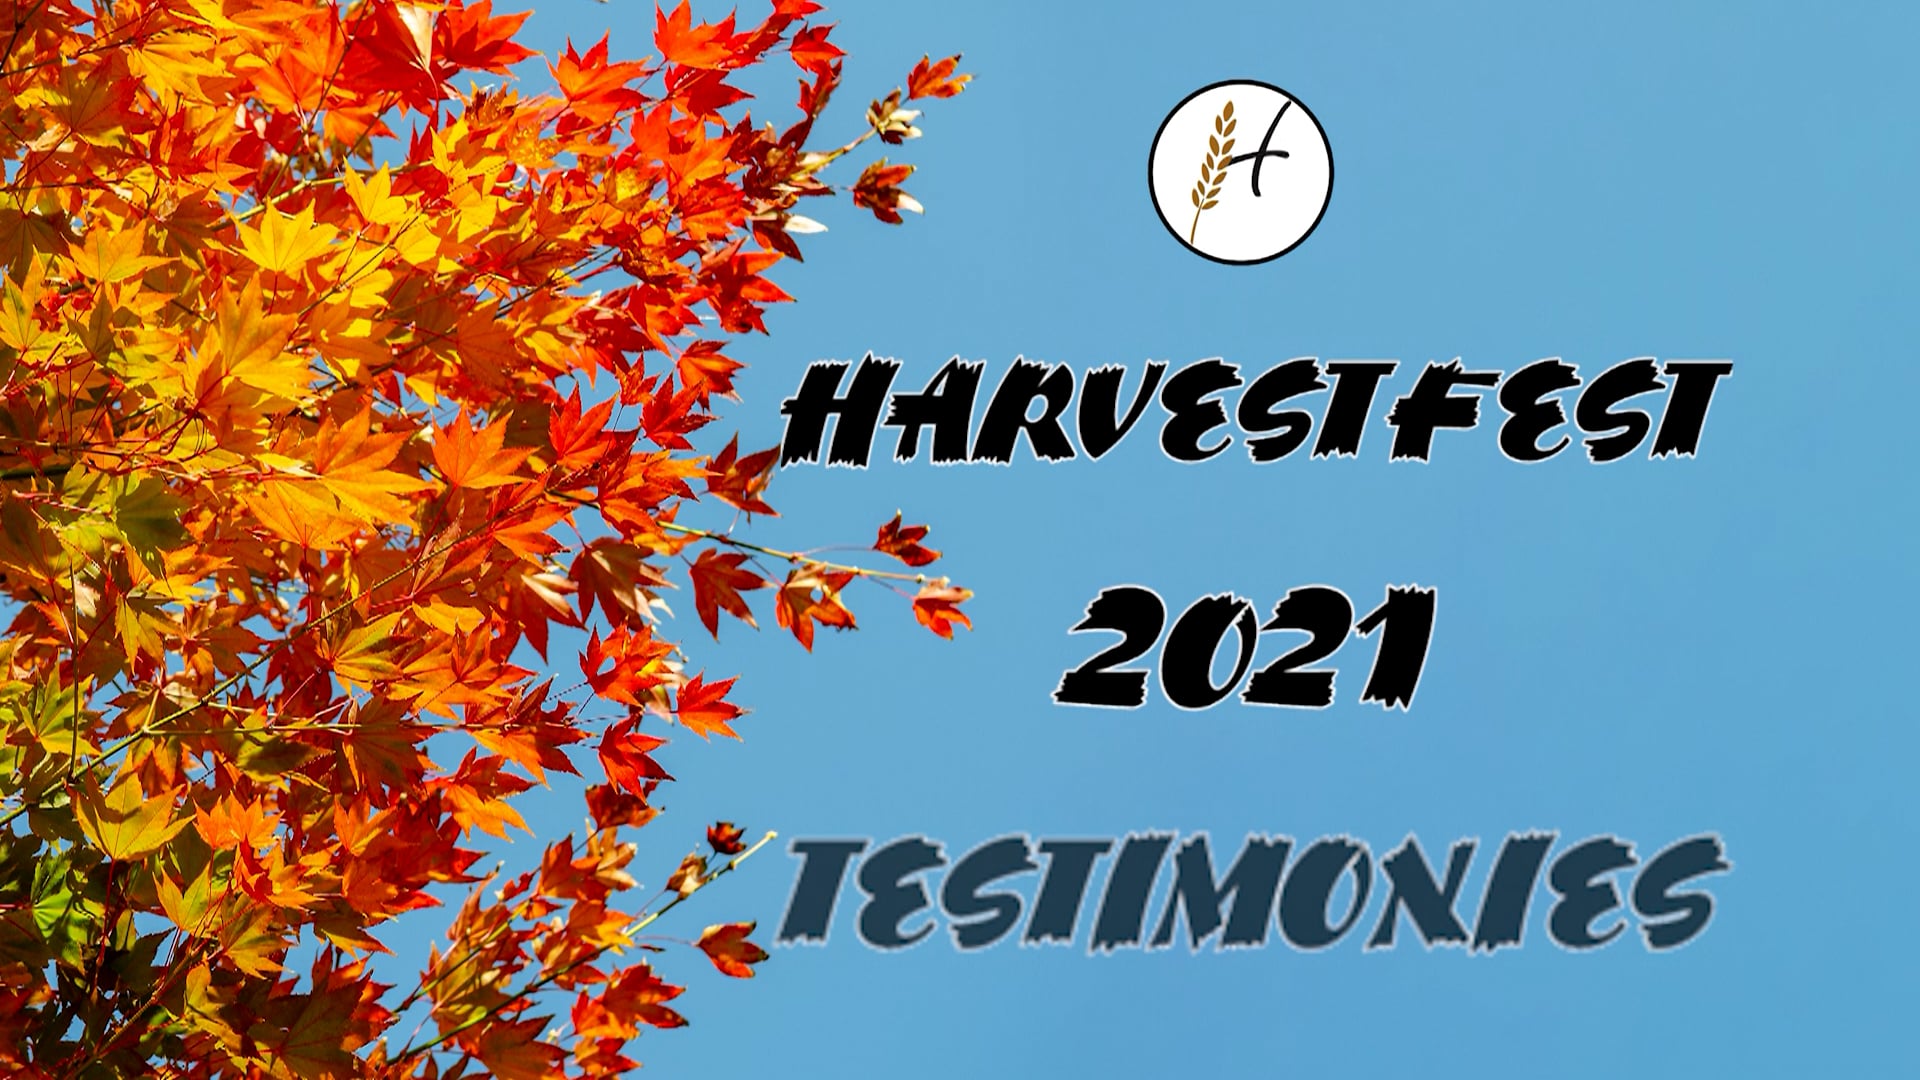 2021-10-17  HarvestFest Testimonies